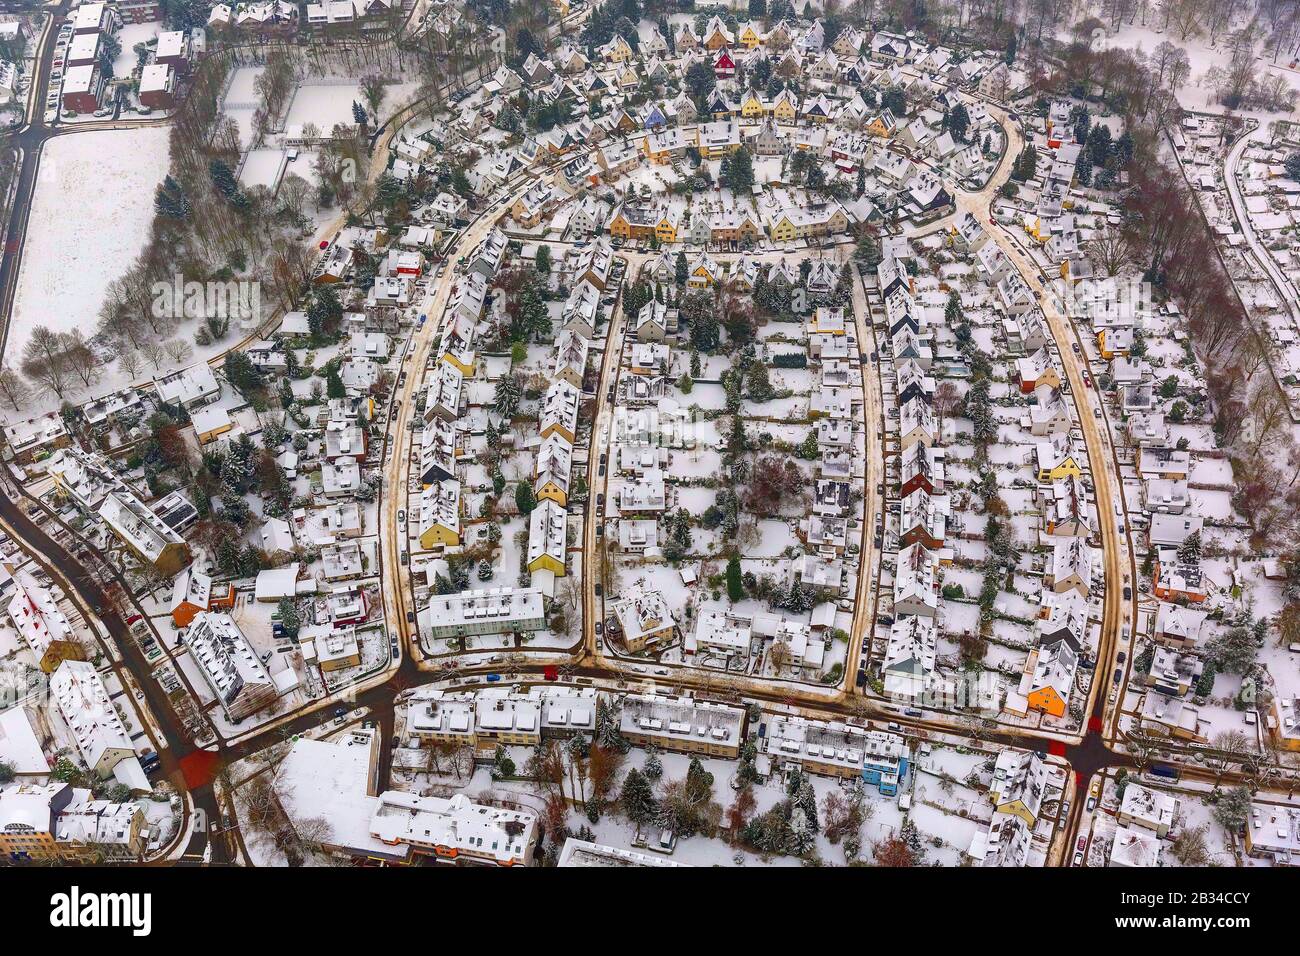 , urbanization on the Holleter, Hofringstrasse, Gehrberg, 18.01.2013, aerial view, Germany, North Rhine-Westphalia, Ruhr Area, Essen Stock Photo